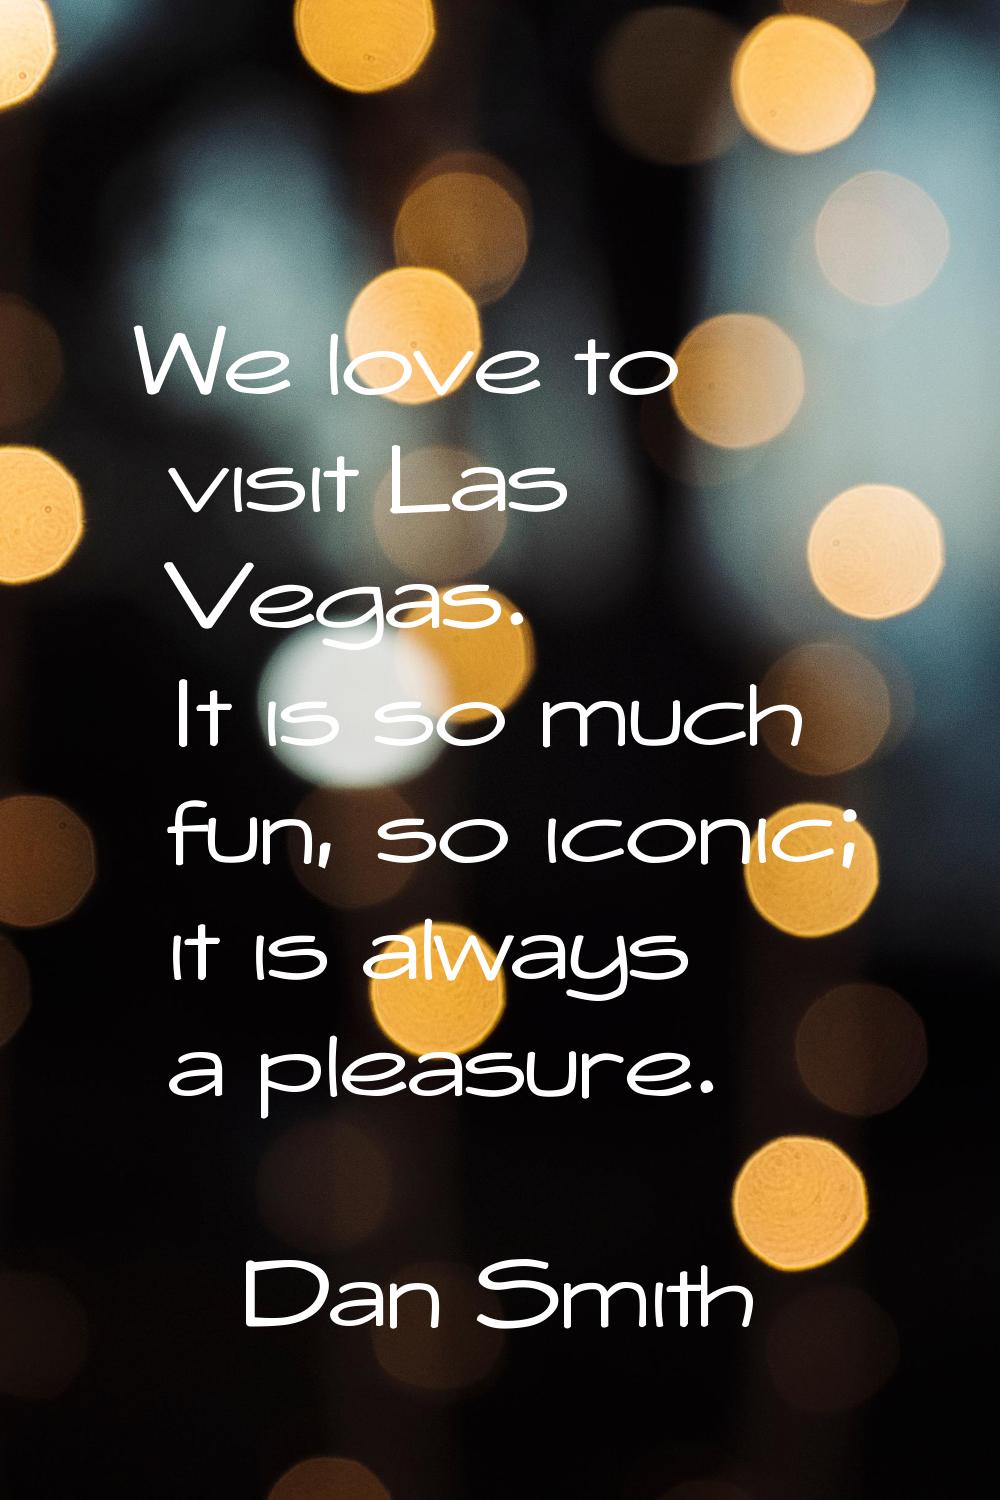 We love to visit Las Vegas. It is so much fun, so iconic; it is always a pleasure.